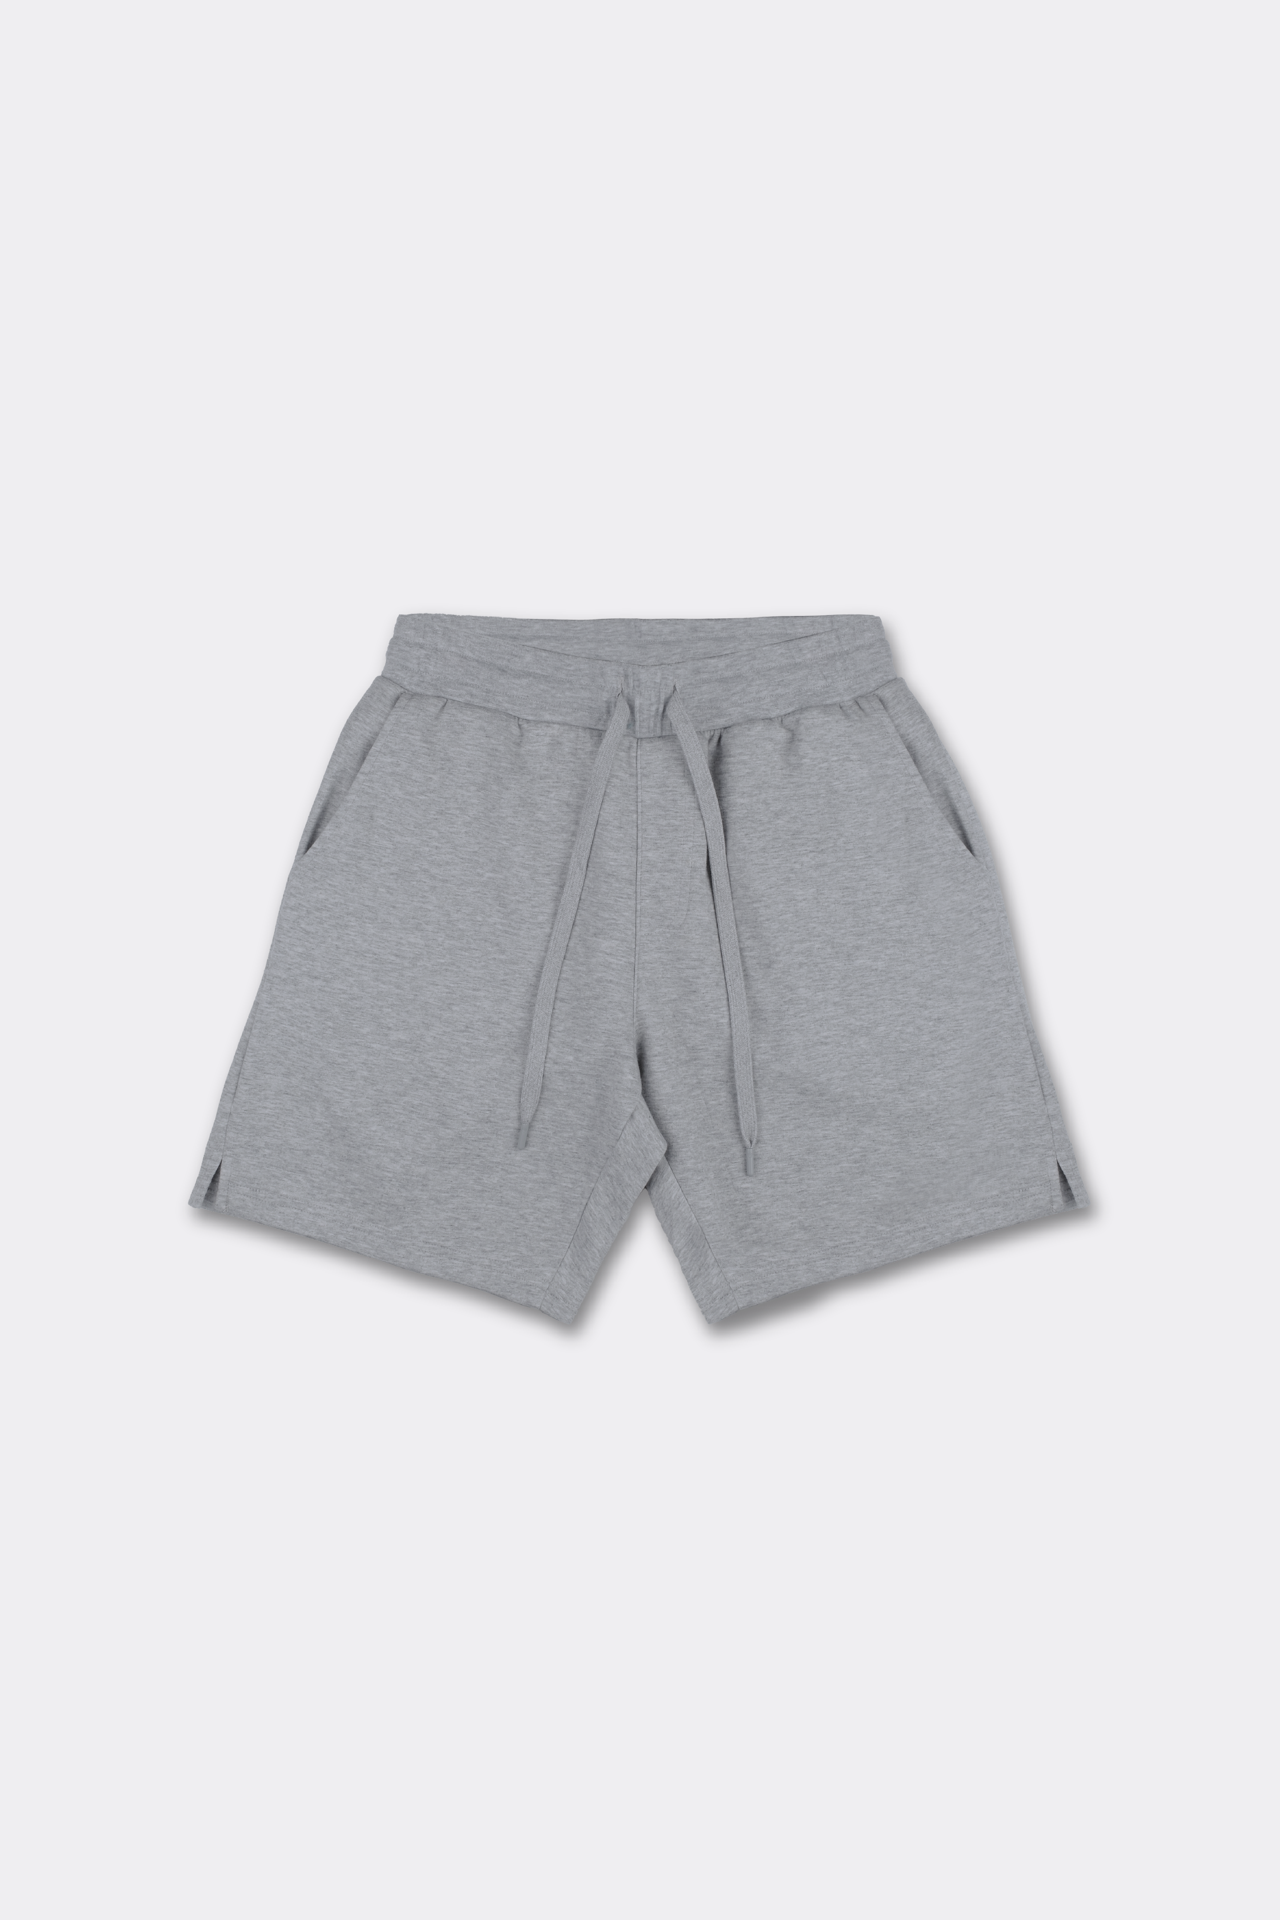 Explorer Shorts 7" - [MIGO] - [Hong Kong Brand] - [Menswear] - [本地品牌] - [男裝] - [運動服] - [casual wear] 